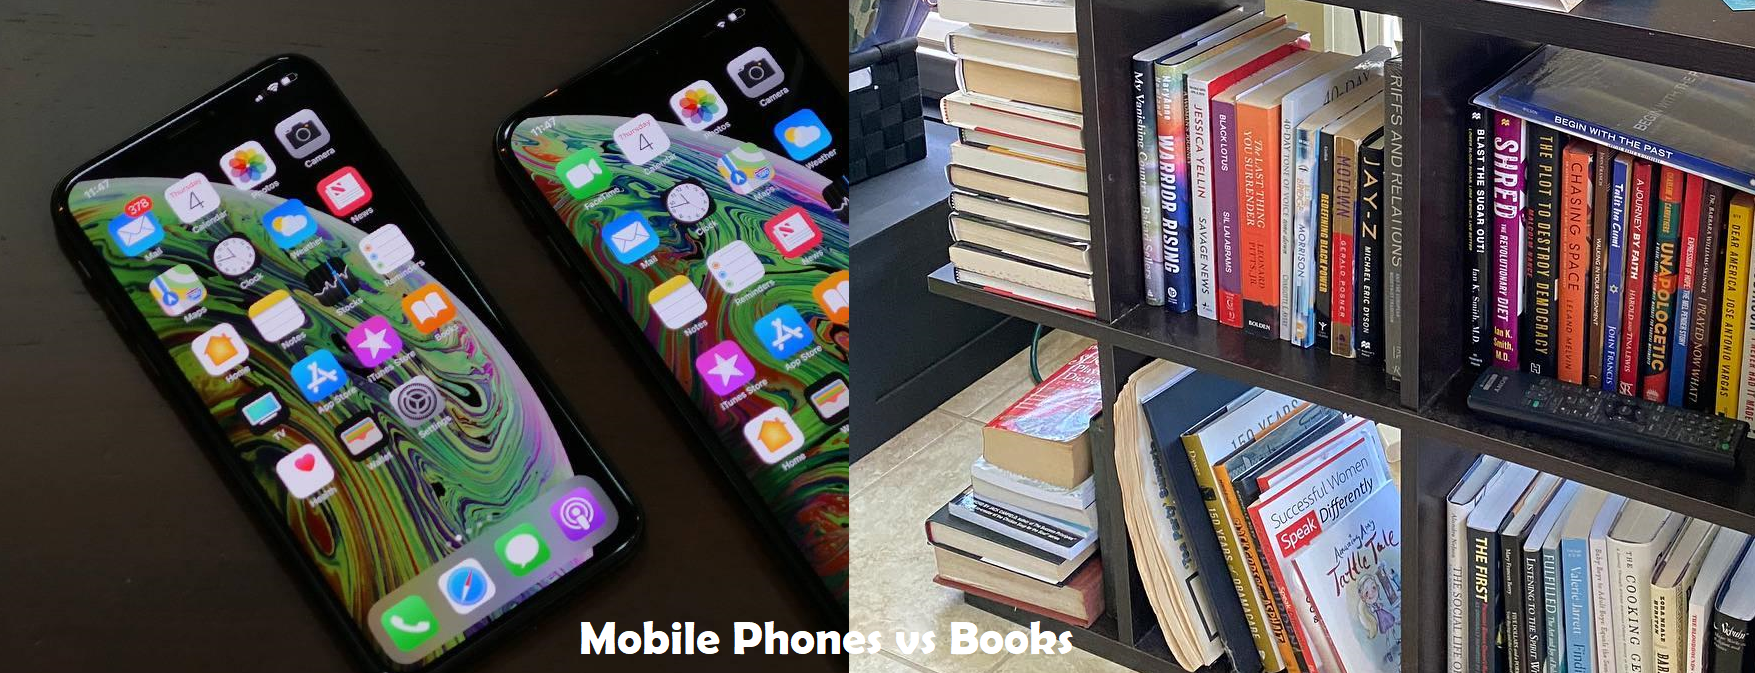 mobile phones vs books